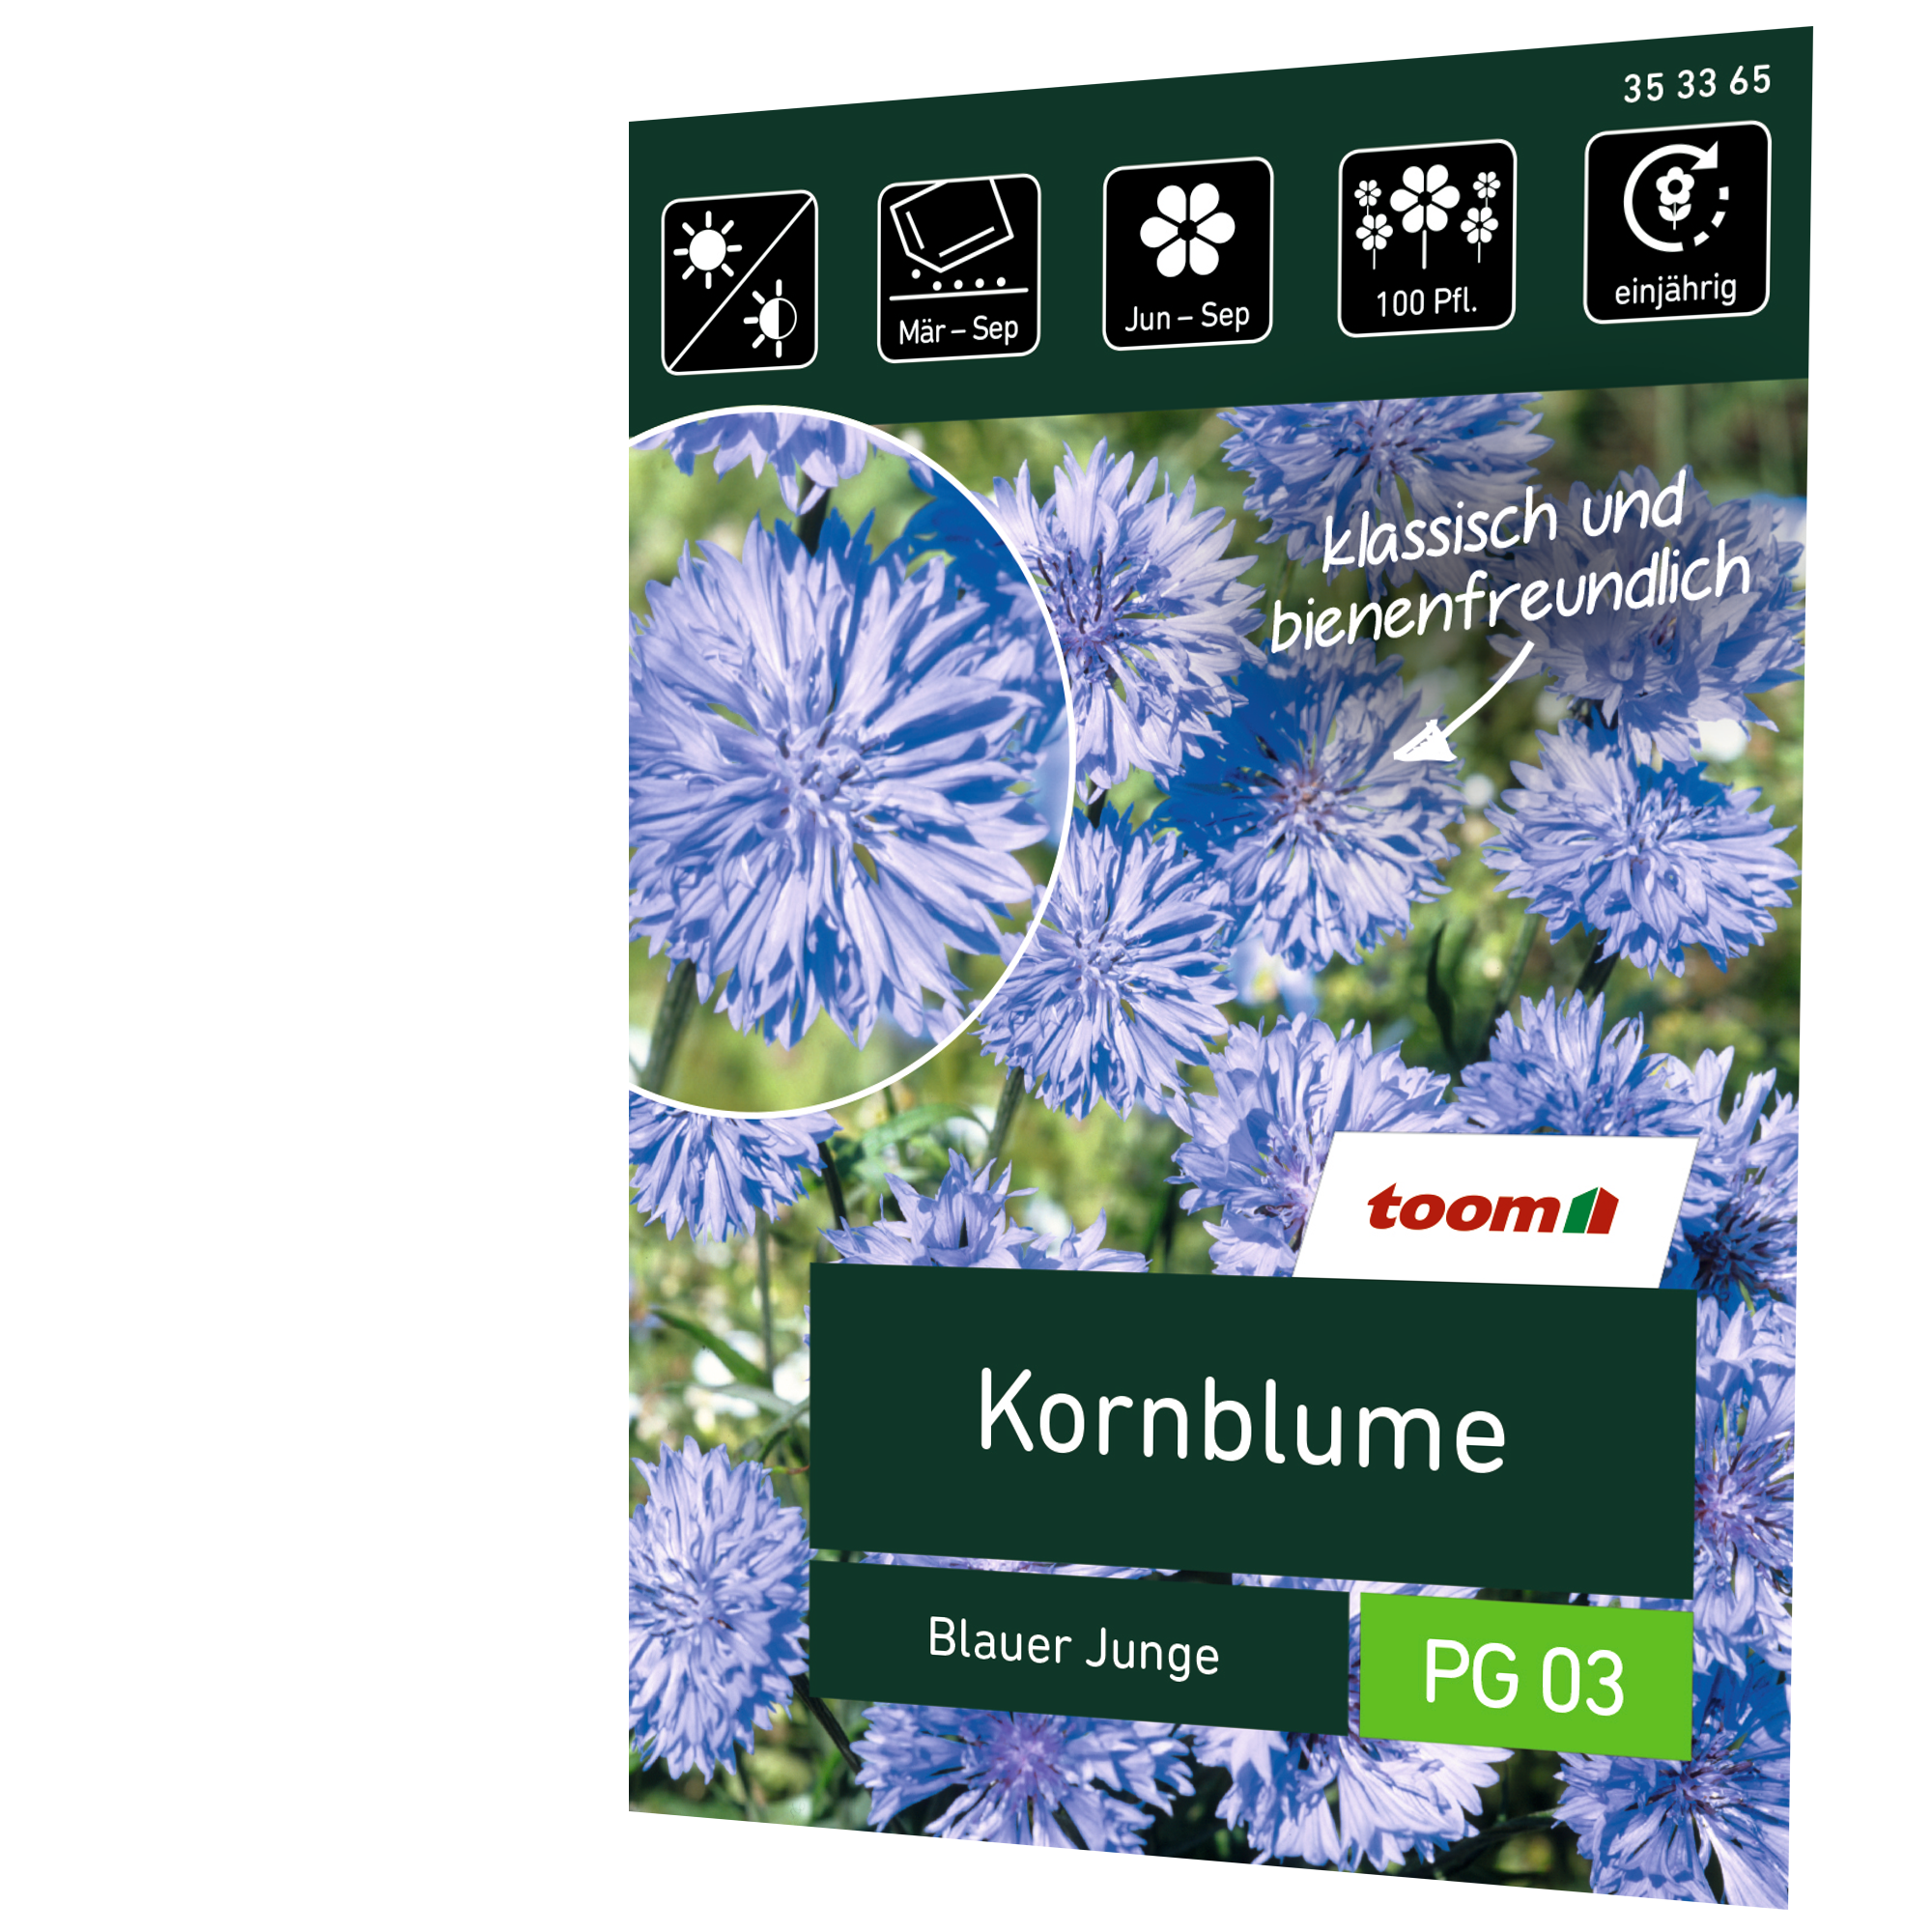 Kornblume 'Blauer Junge' + product picture